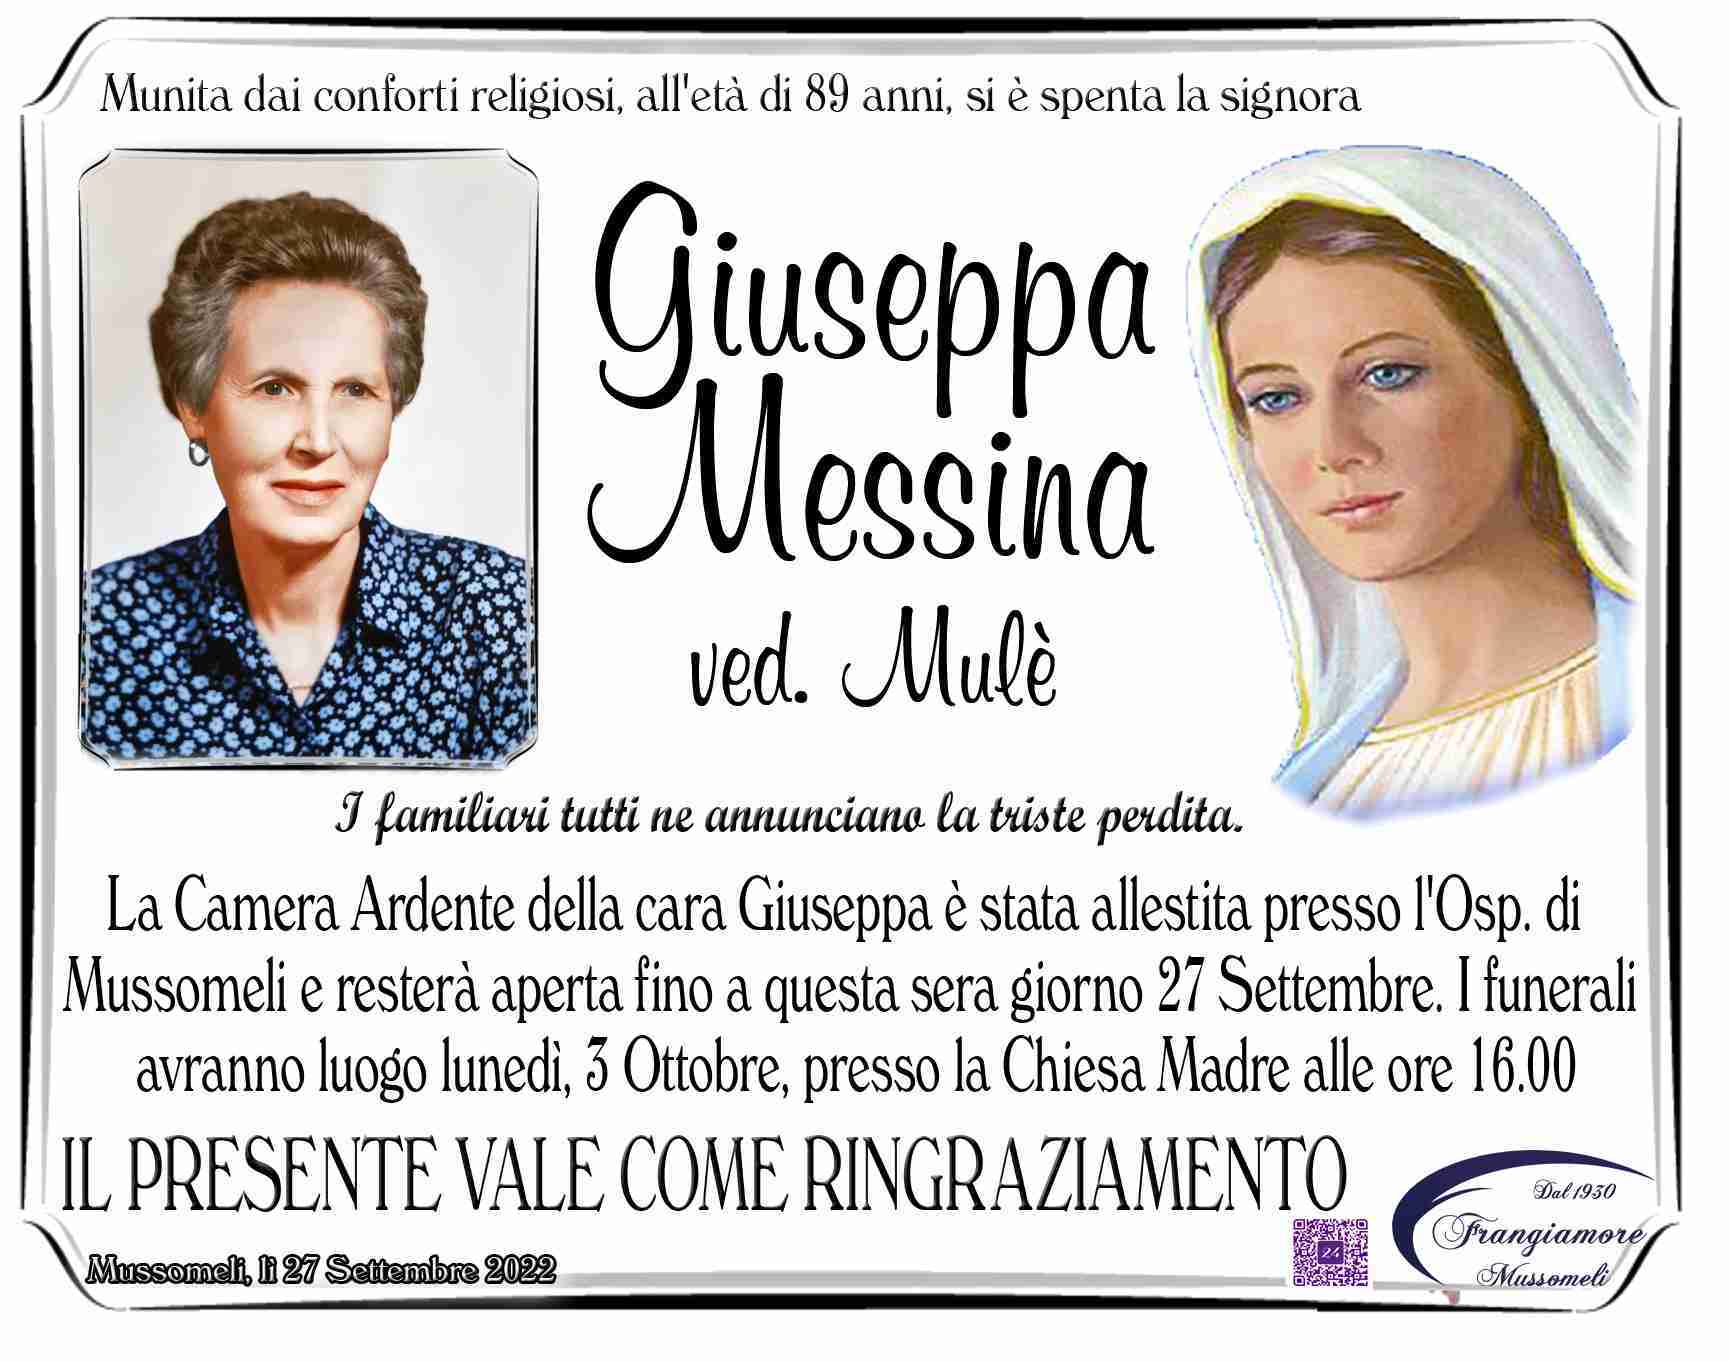 Giuseppa Messina